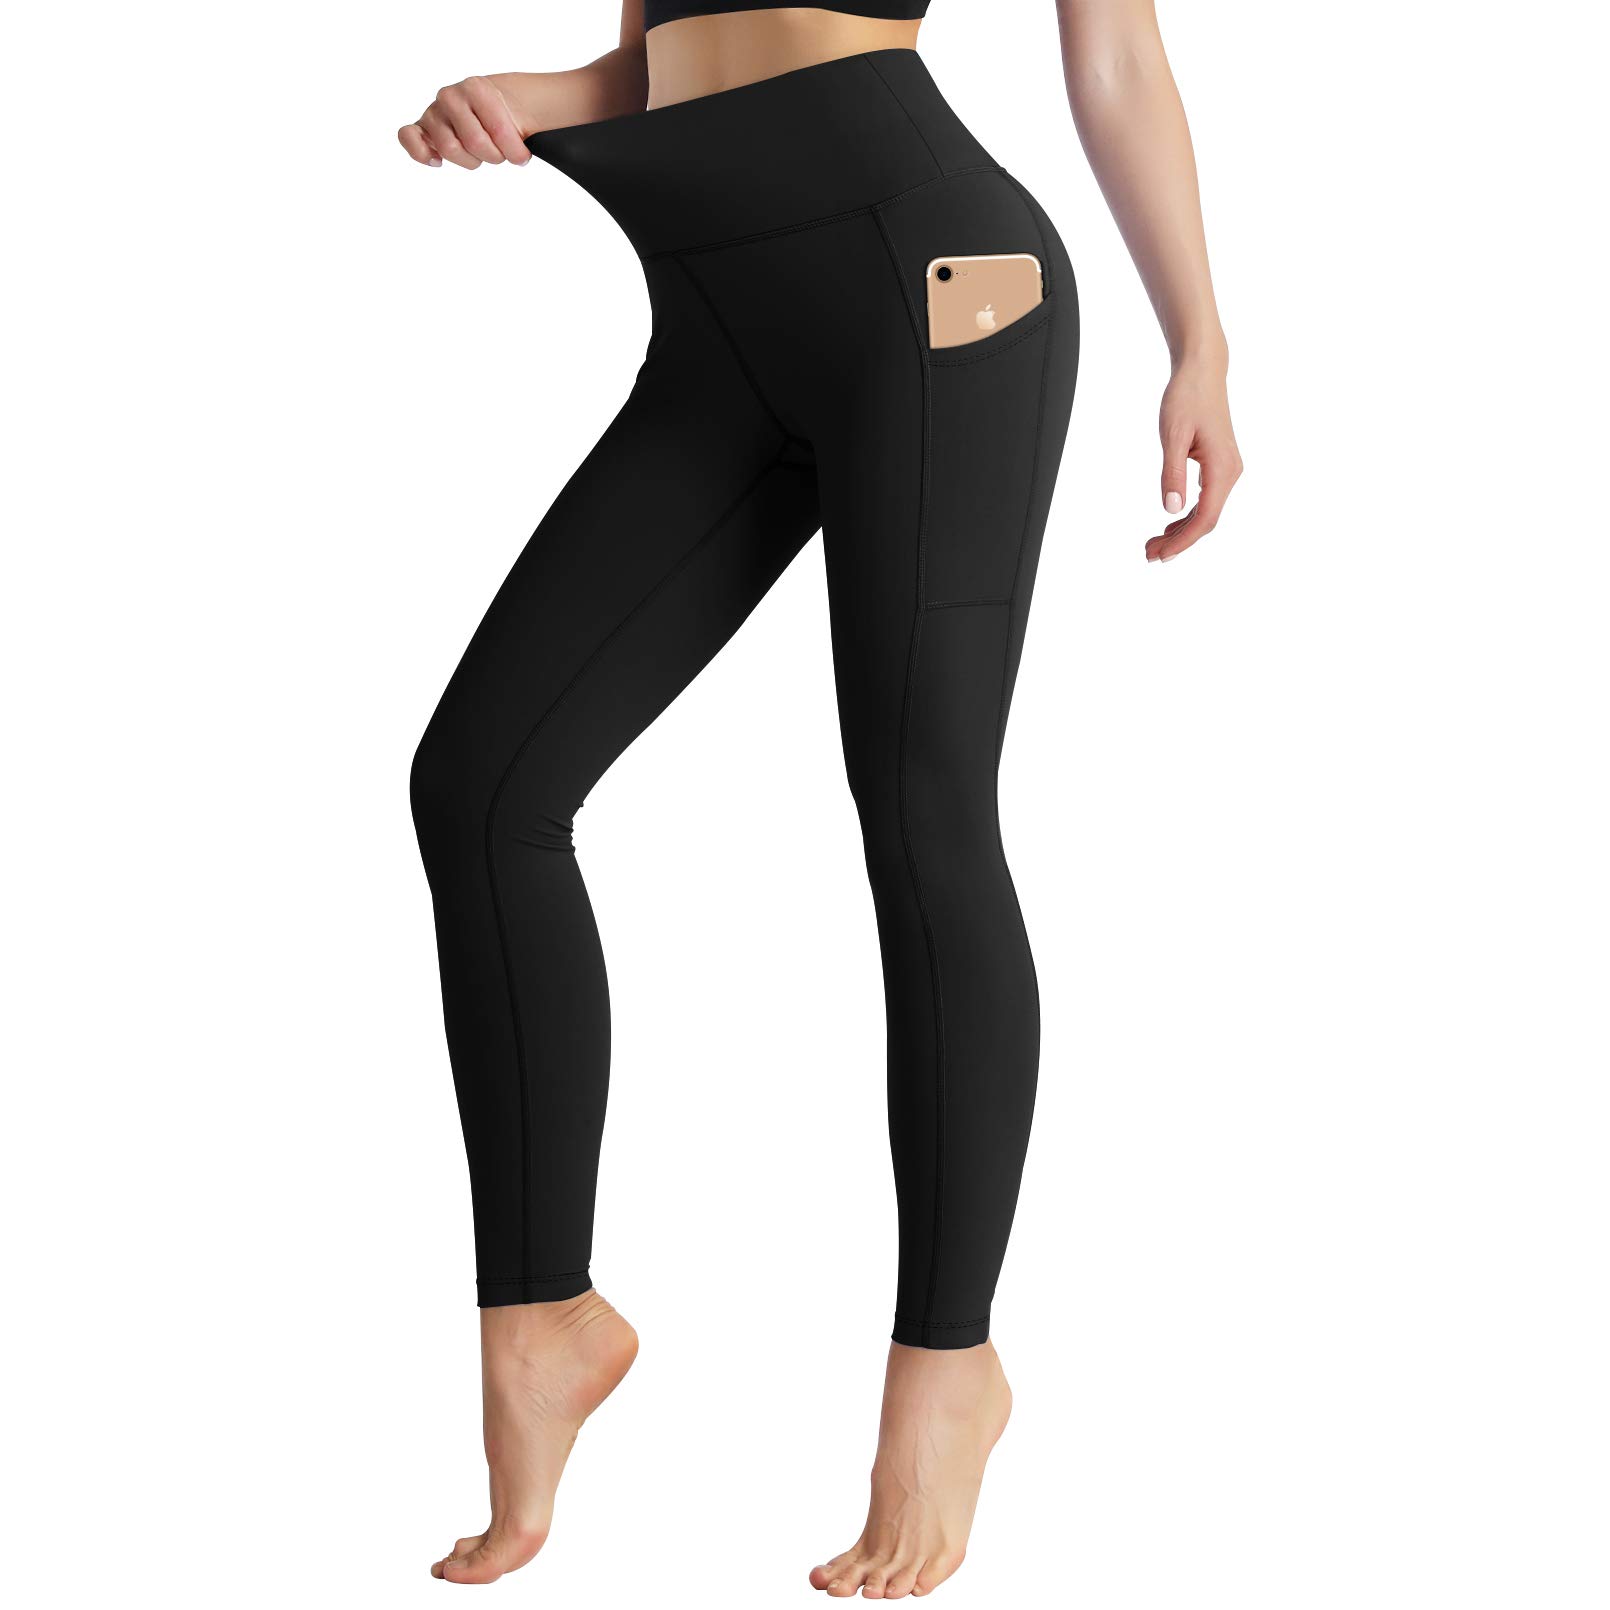 Women Leggings with Pocket,High Waist Elastic Yoga Pants Tight Gym